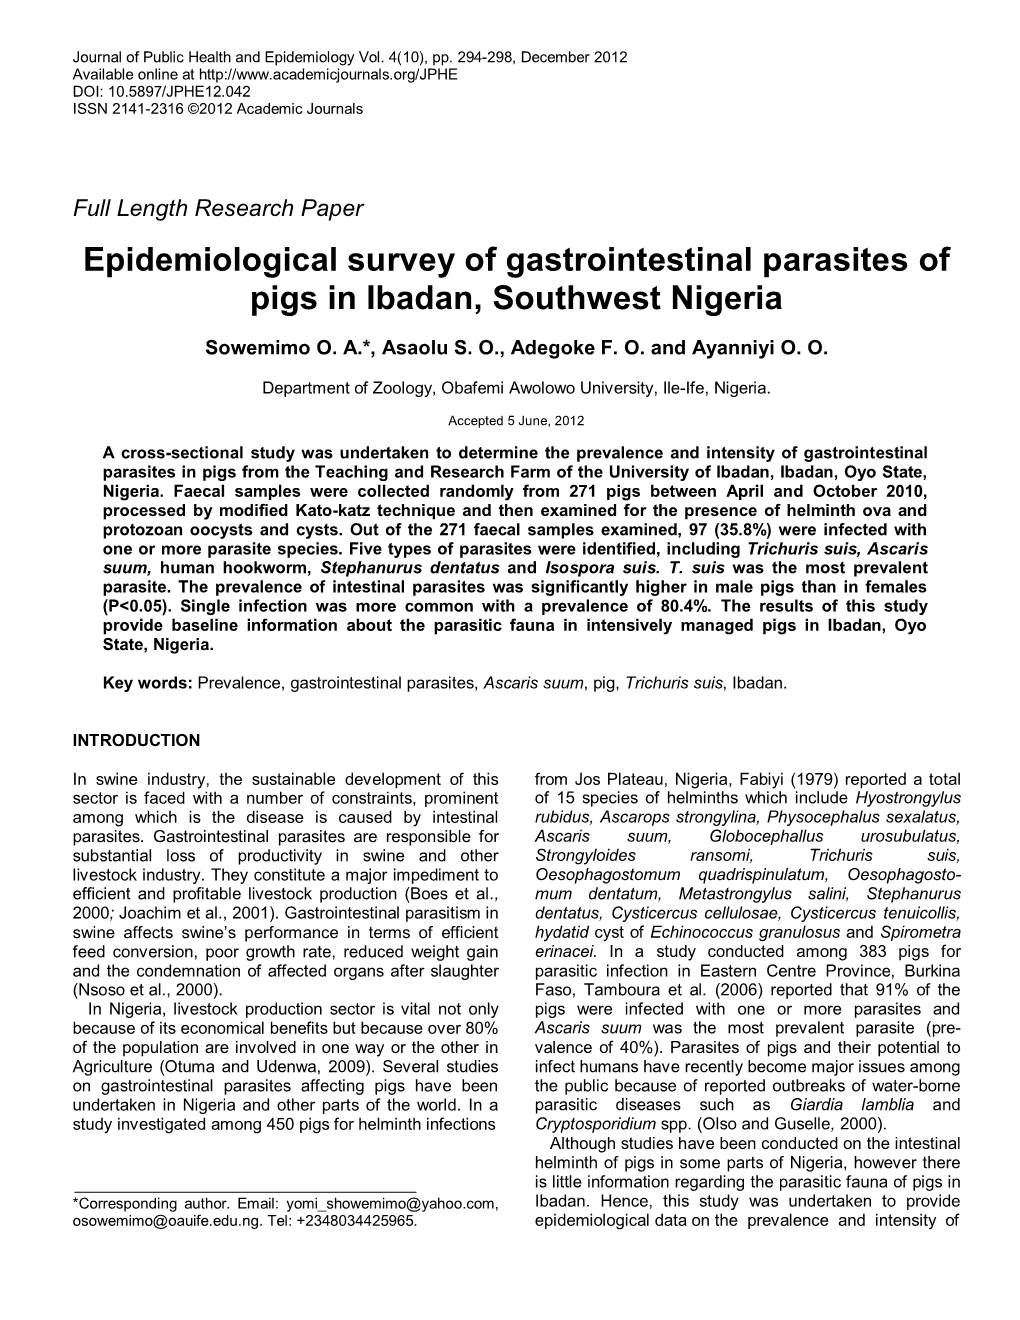 Epidemiological Survey of Gastrointestinal Parasites of Pigs in Ibadan, Southwest Nigeria